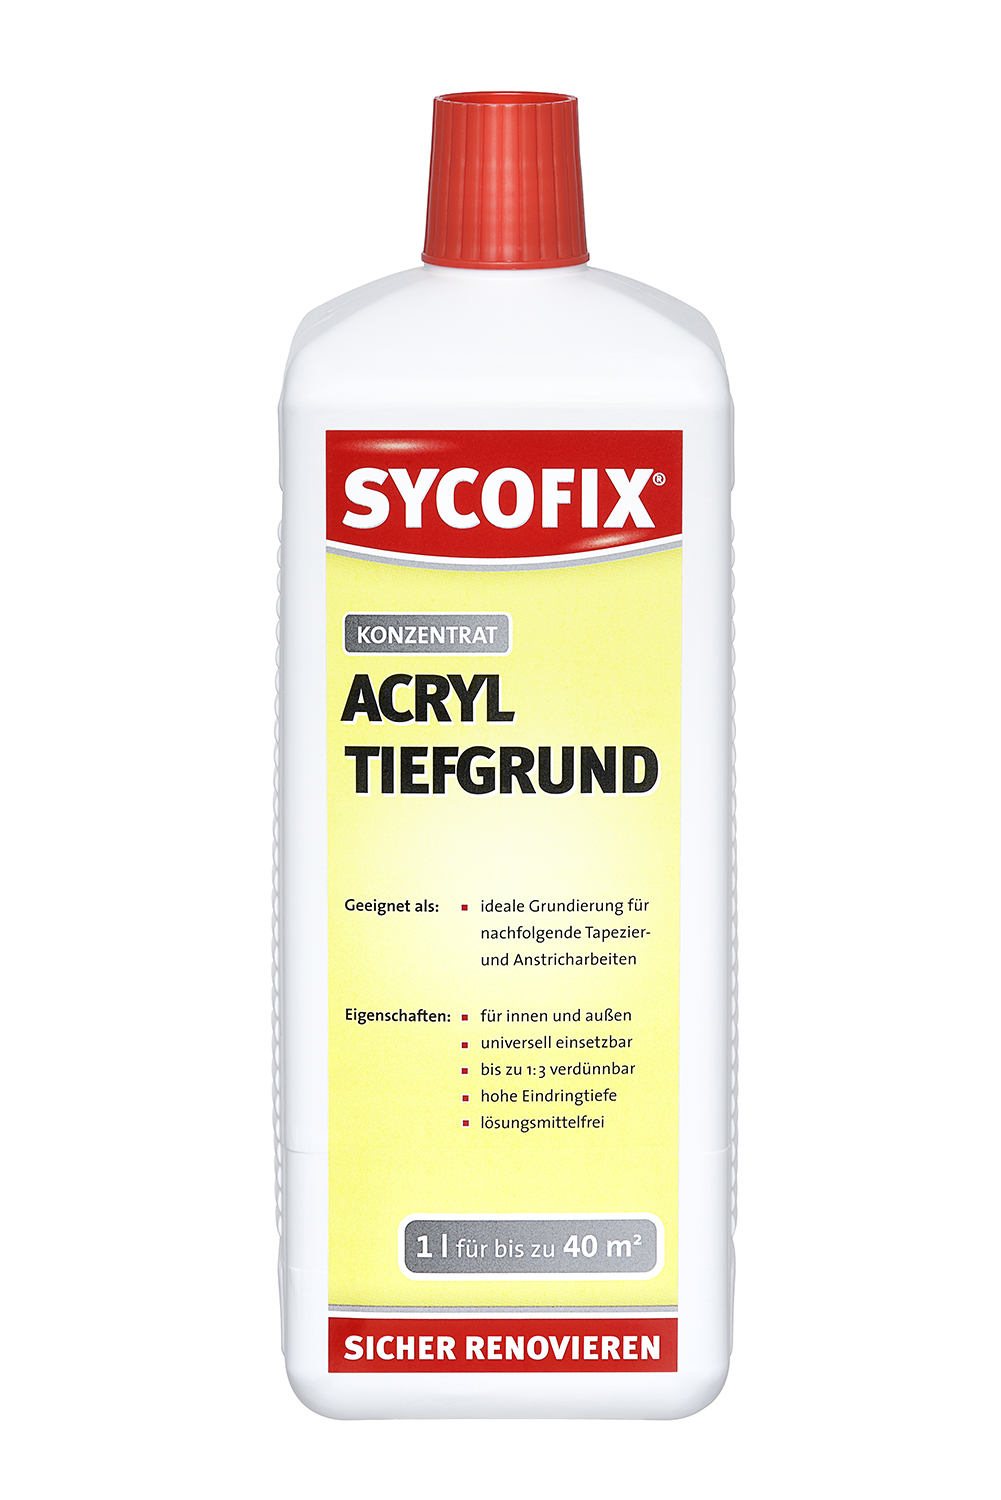 Sycofix Acryl Tiefgrund Konzentrat 1l